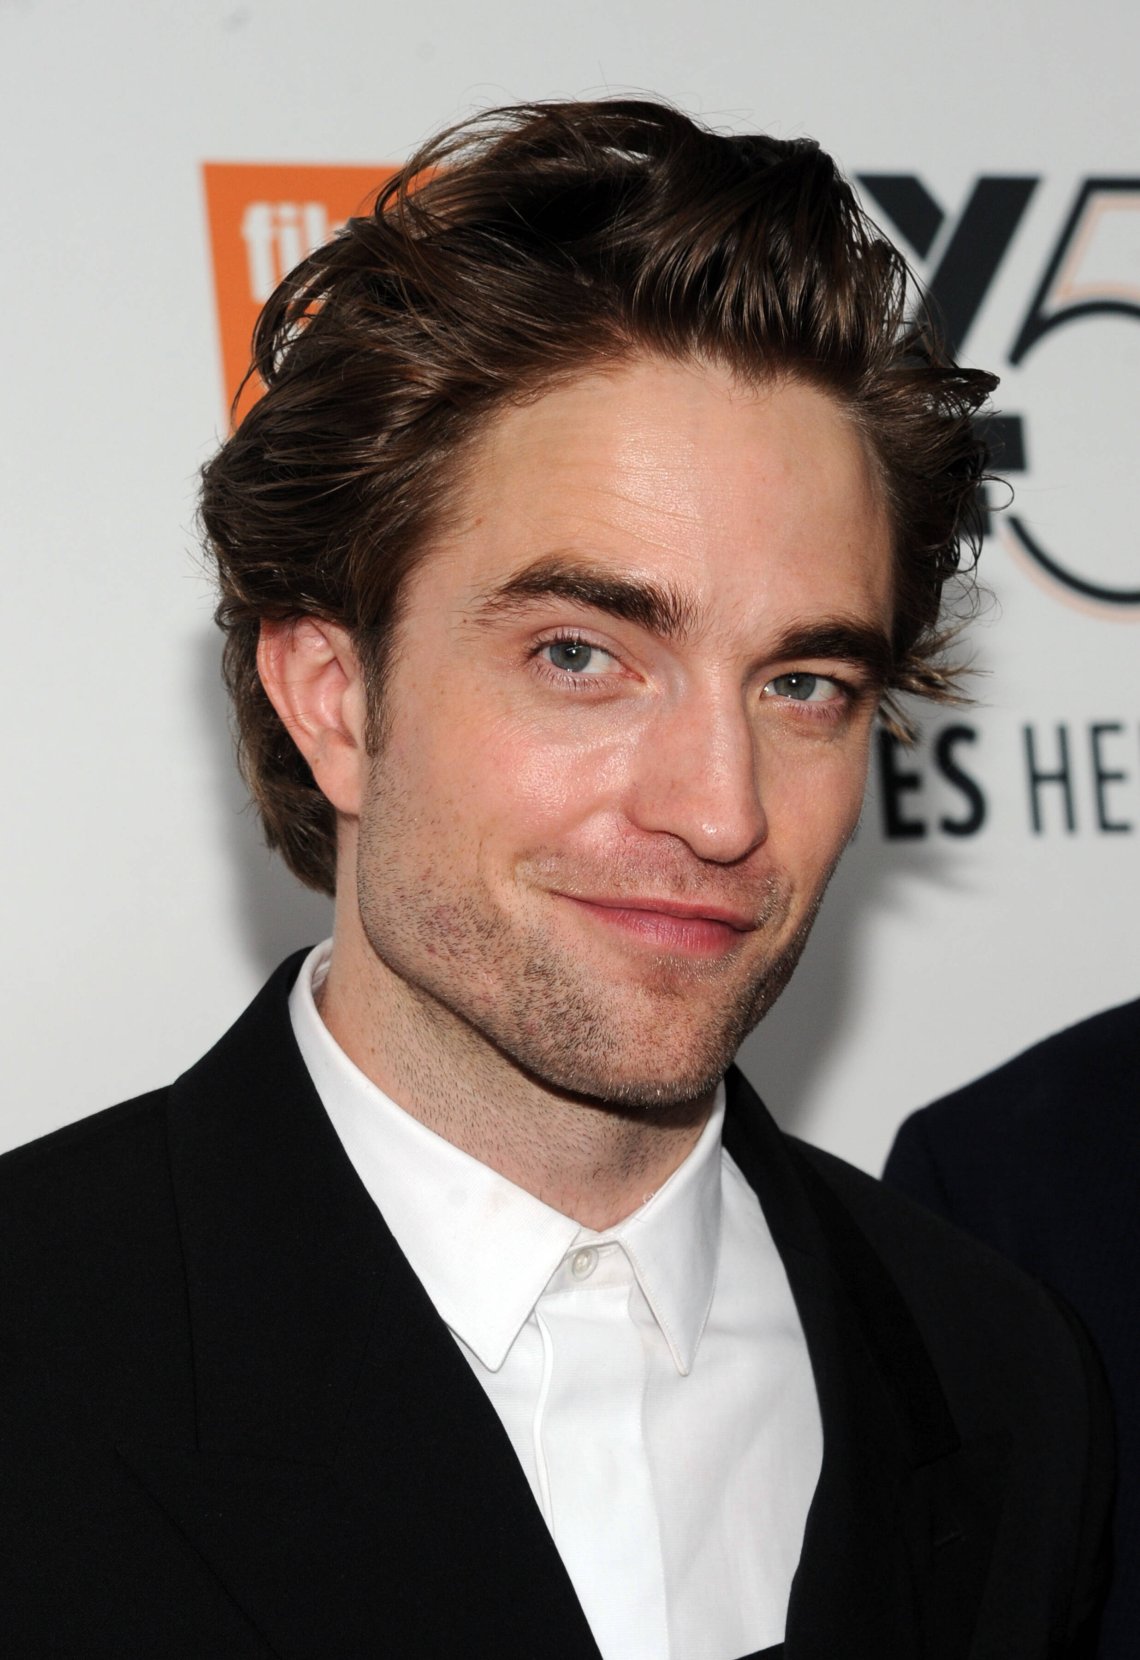 Robert Pattinson | © imago images / MediaPunch